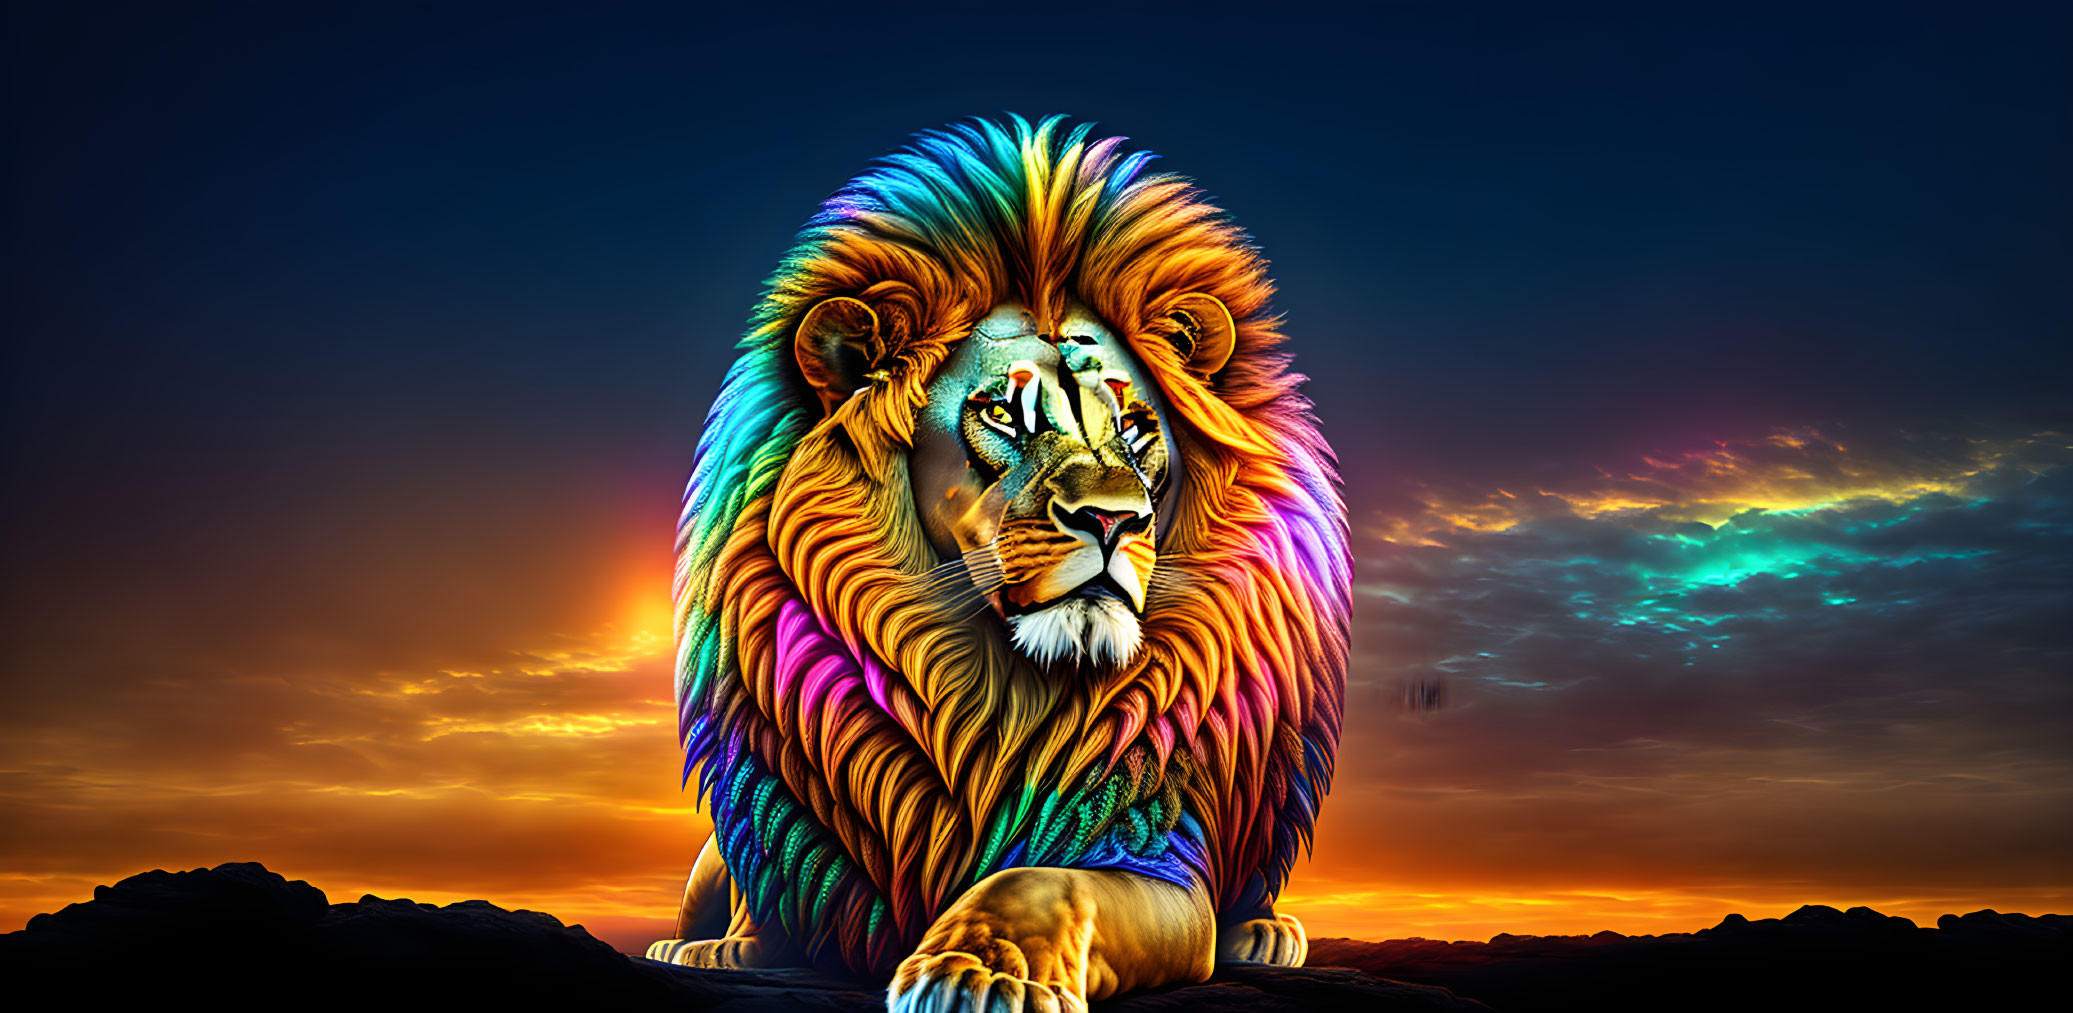 Vivid Digital Art of Lion with Rainbow Mane in Dramatic Sunset